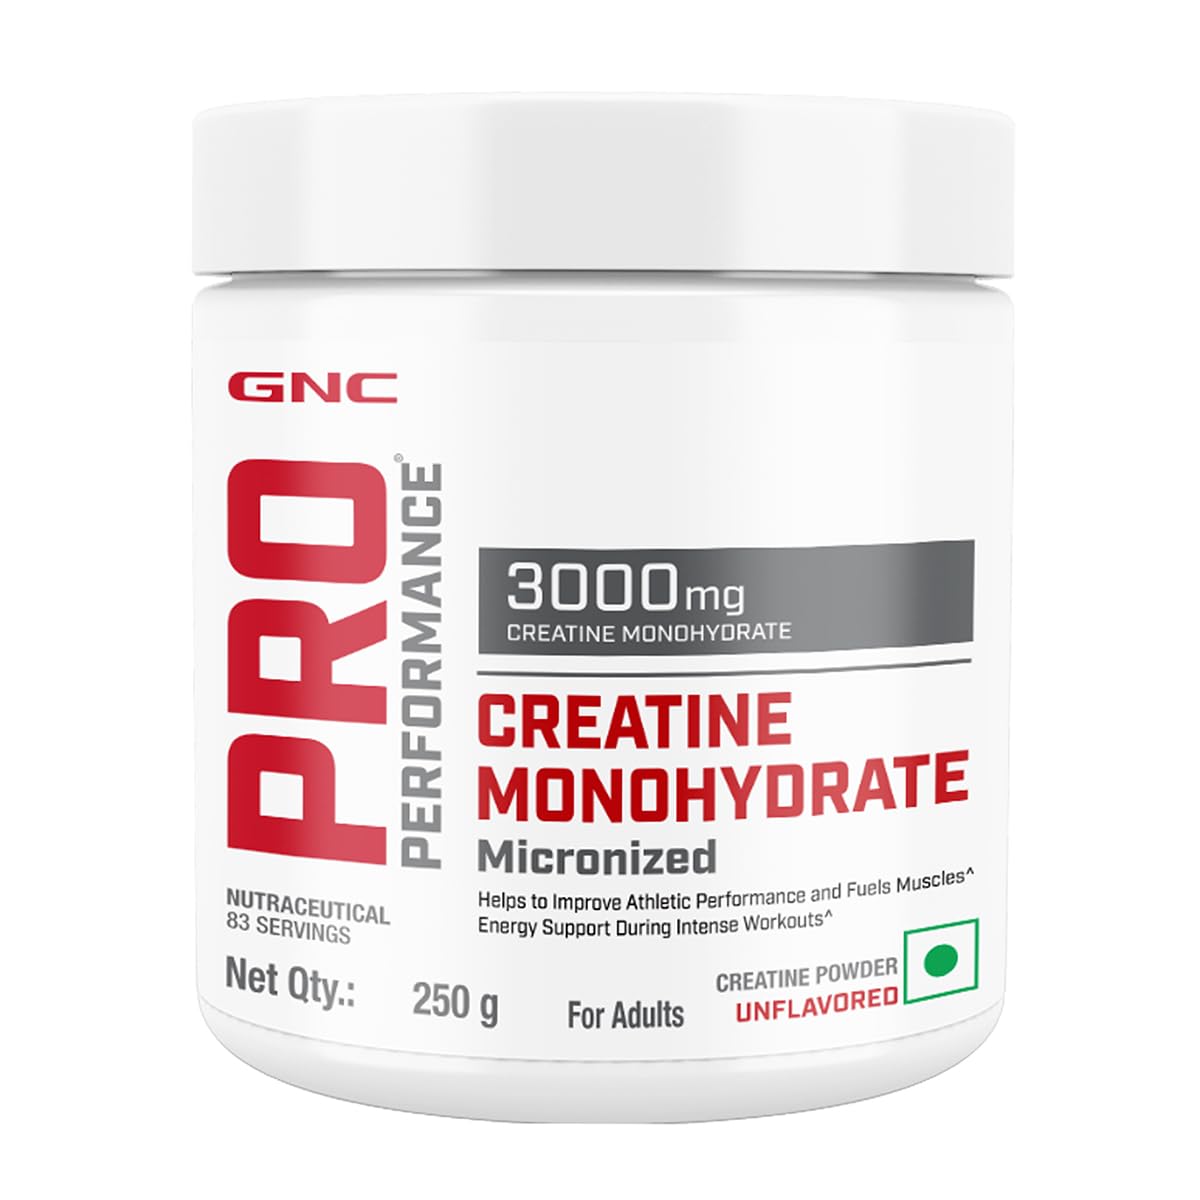 GNC Pro Performance Creatine Monohydrate , 250 Gms	-83 Servings